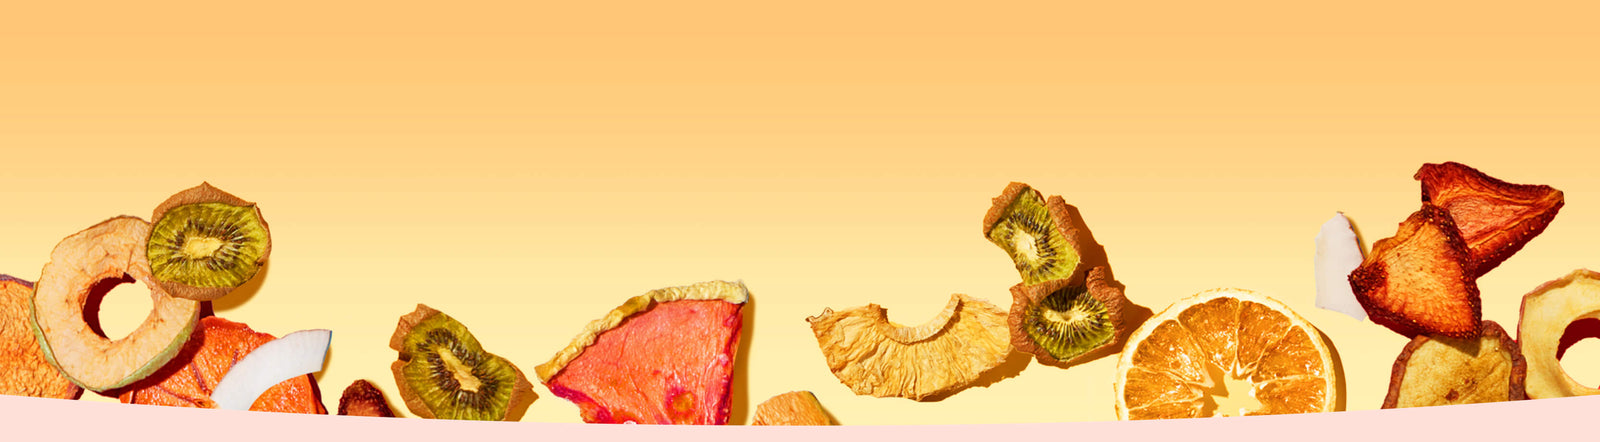 RIND Snacks Dried Fruit, Apple Chips - RIND Snacks, Inc